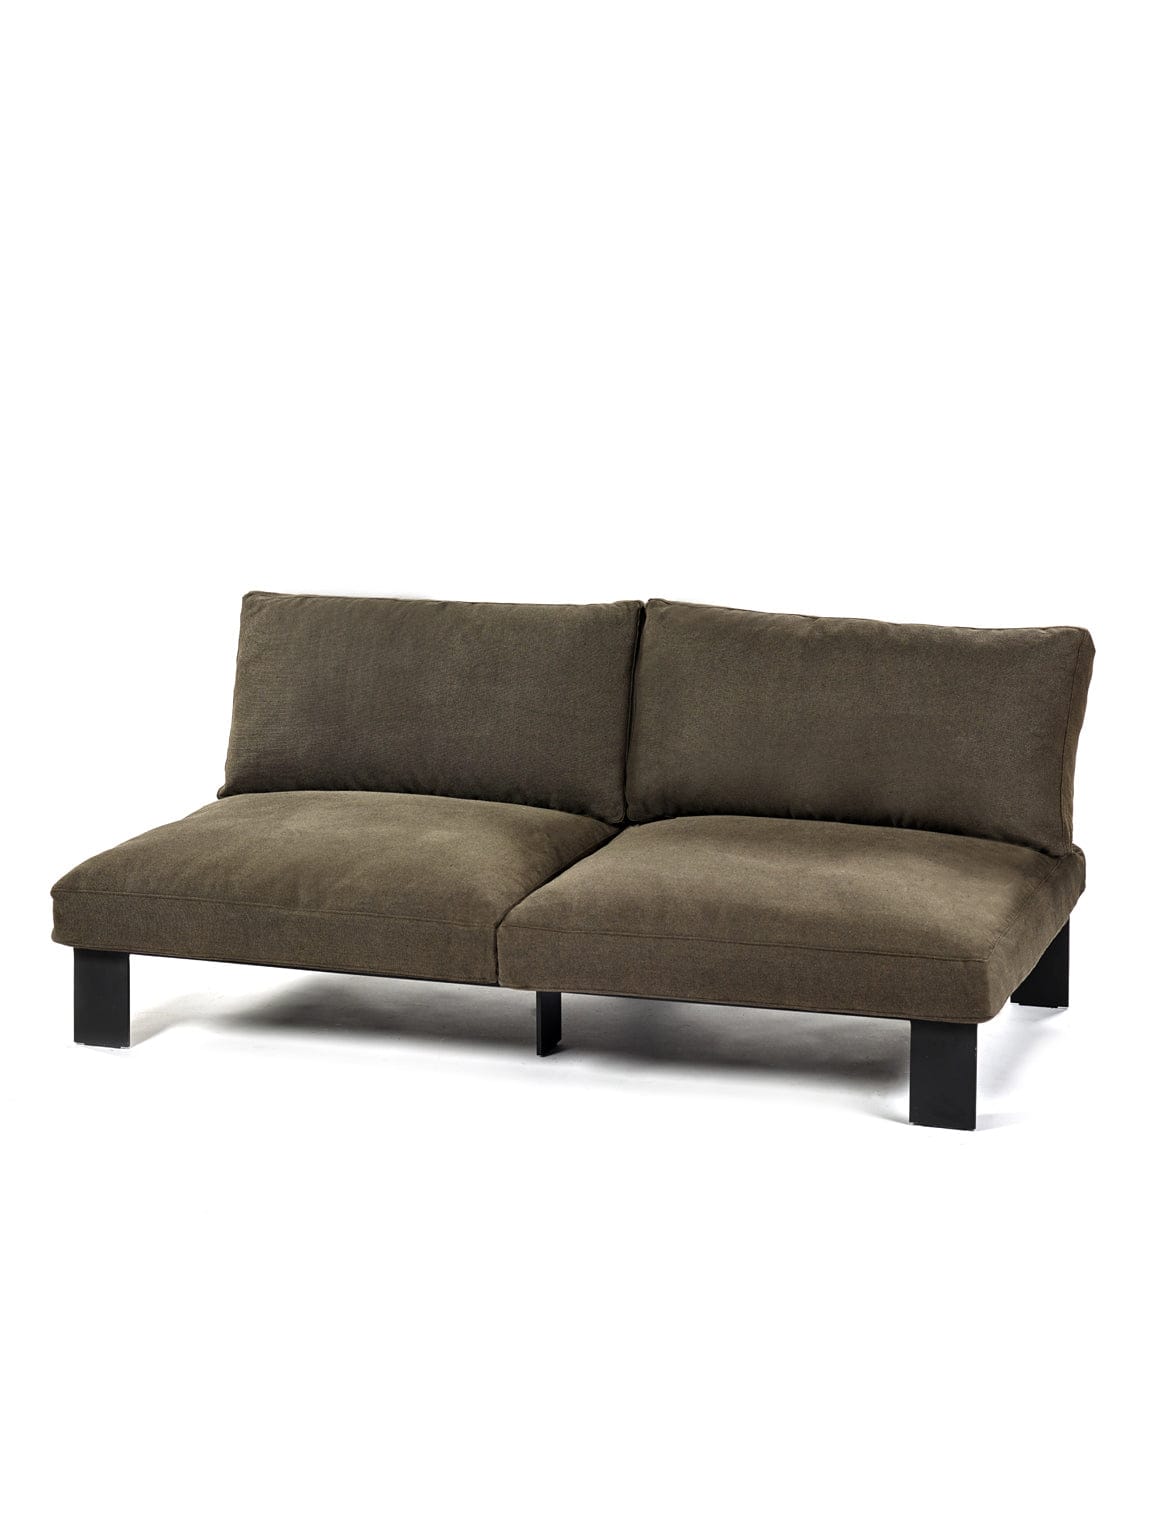 Mombaers Sofa - Sepia - THAT COOL LIVING